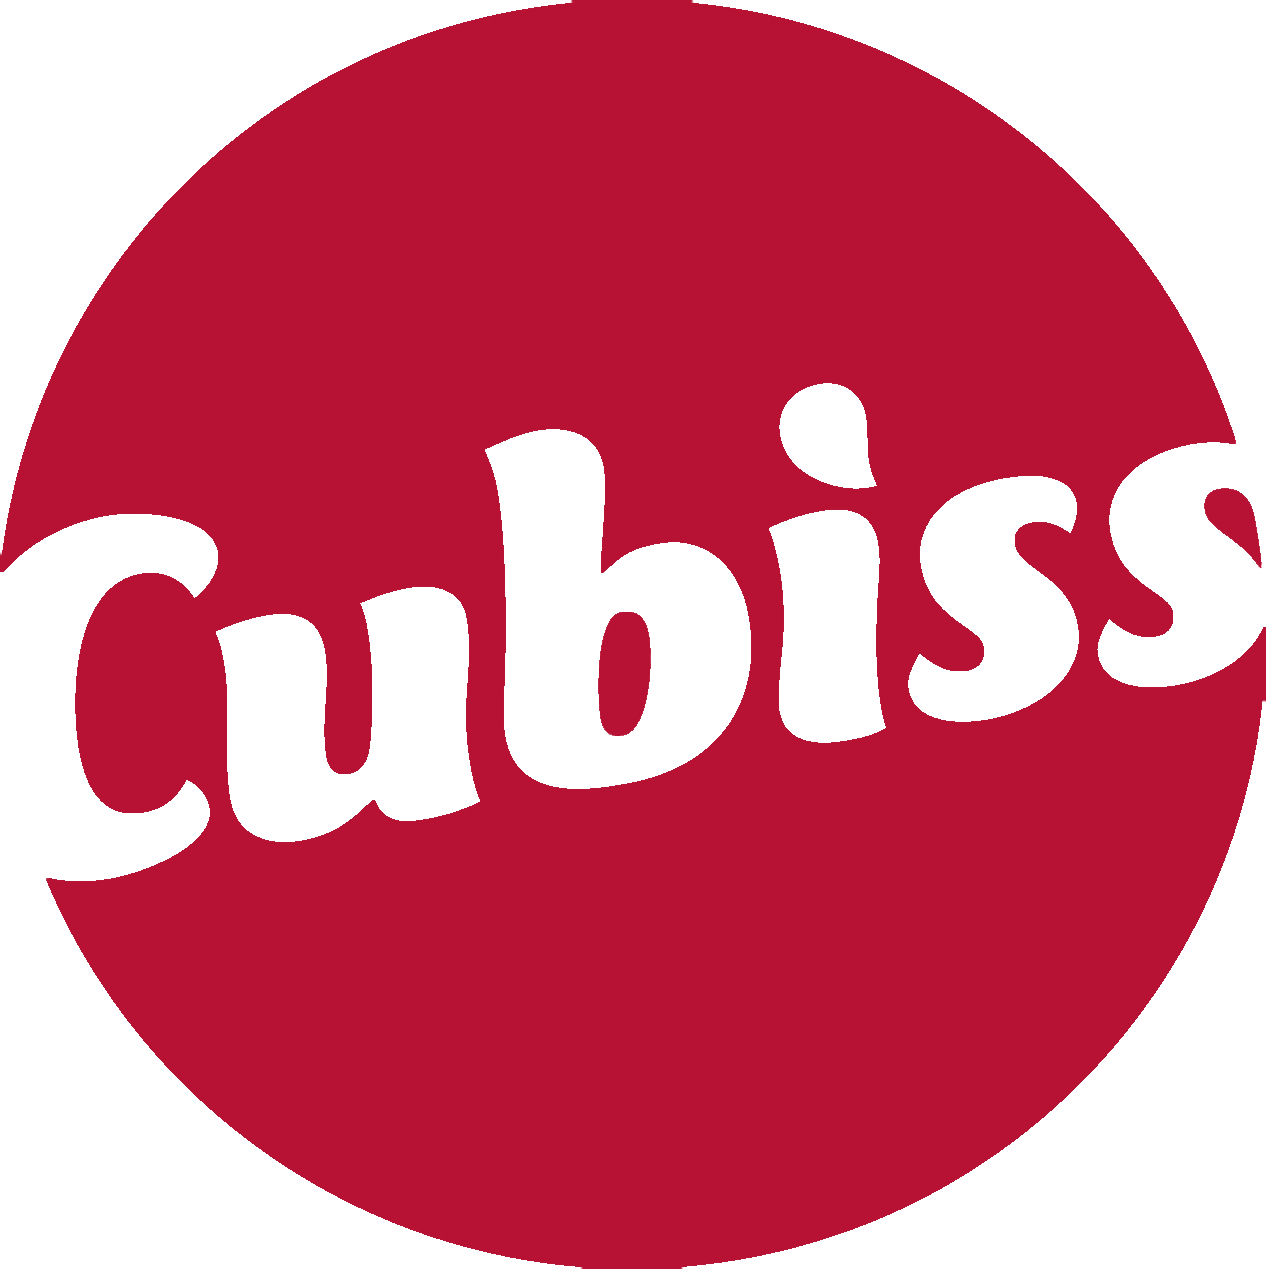 cubiss logo